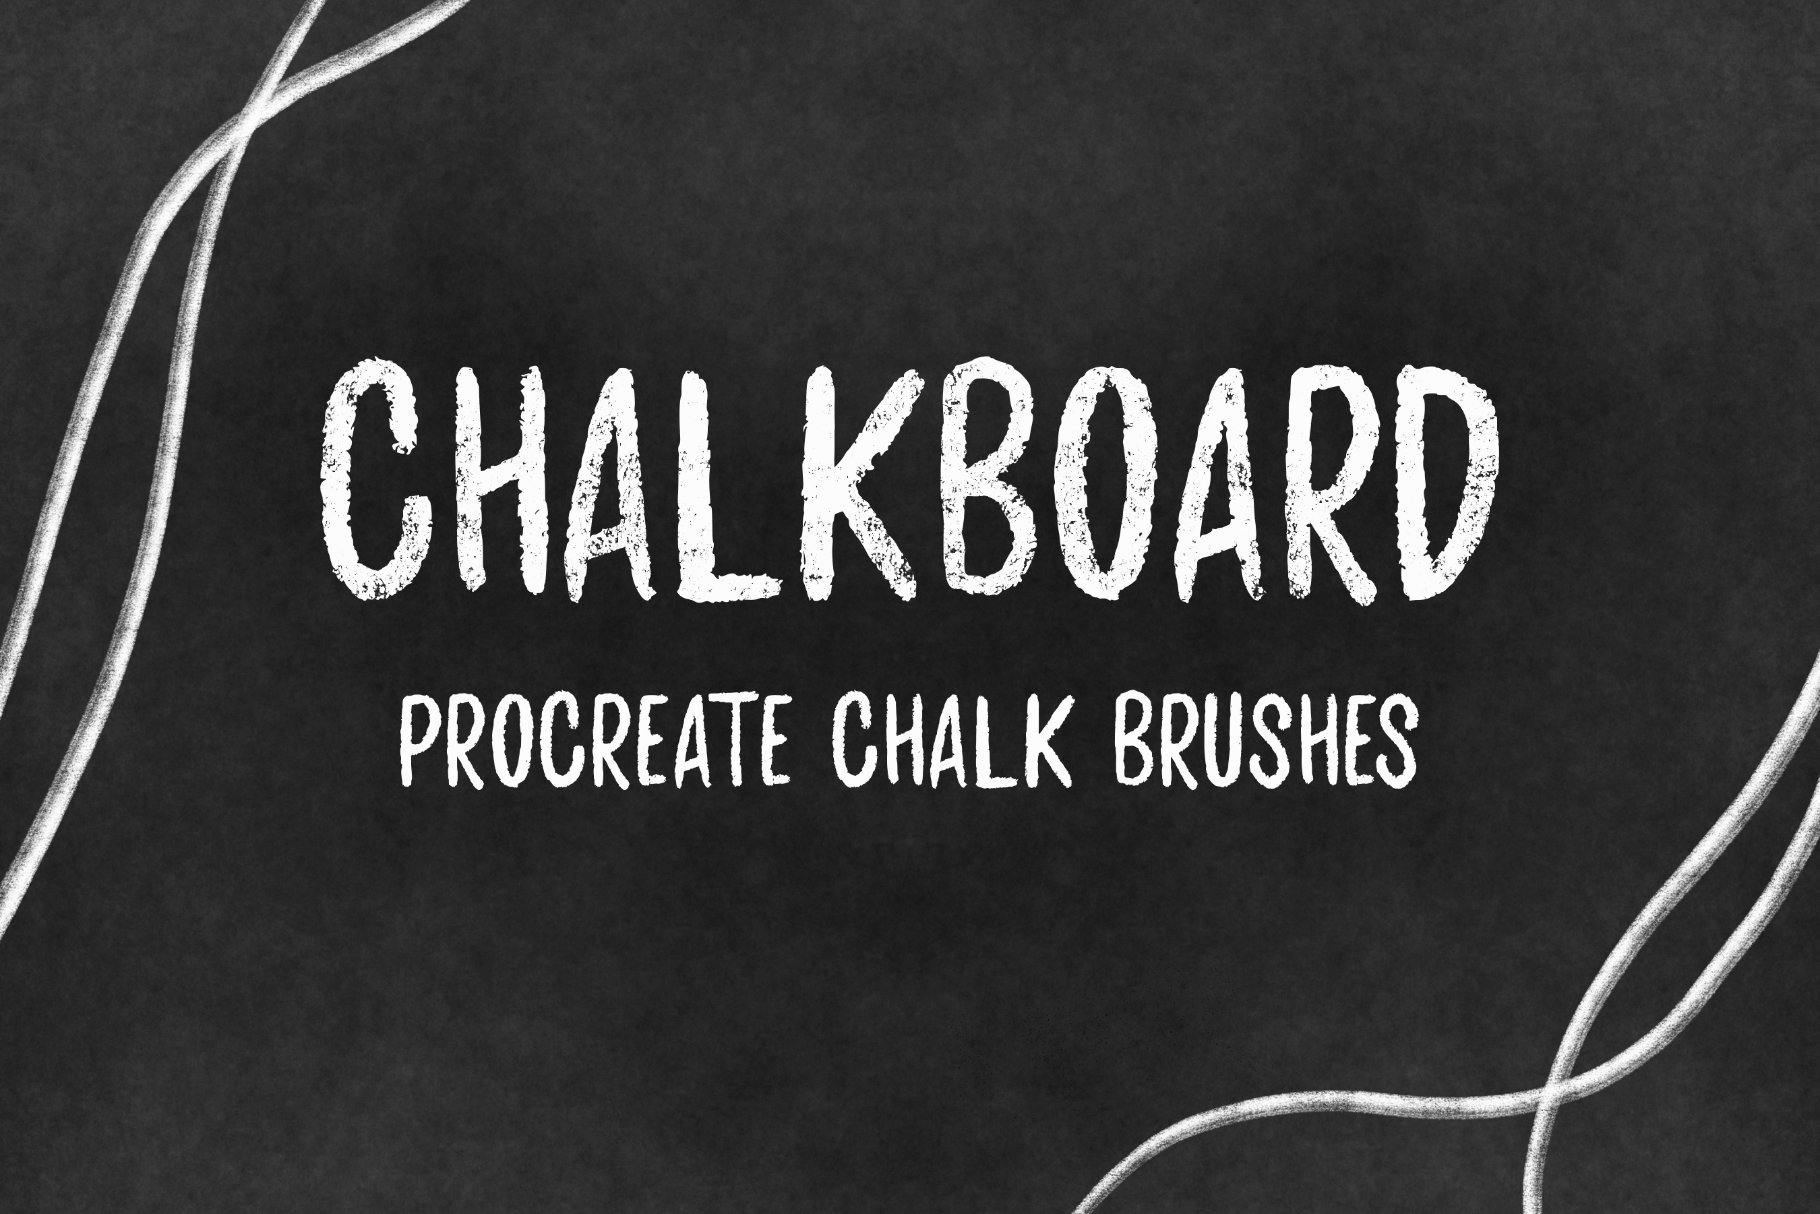 Chalk brushes for Procreate 6684919